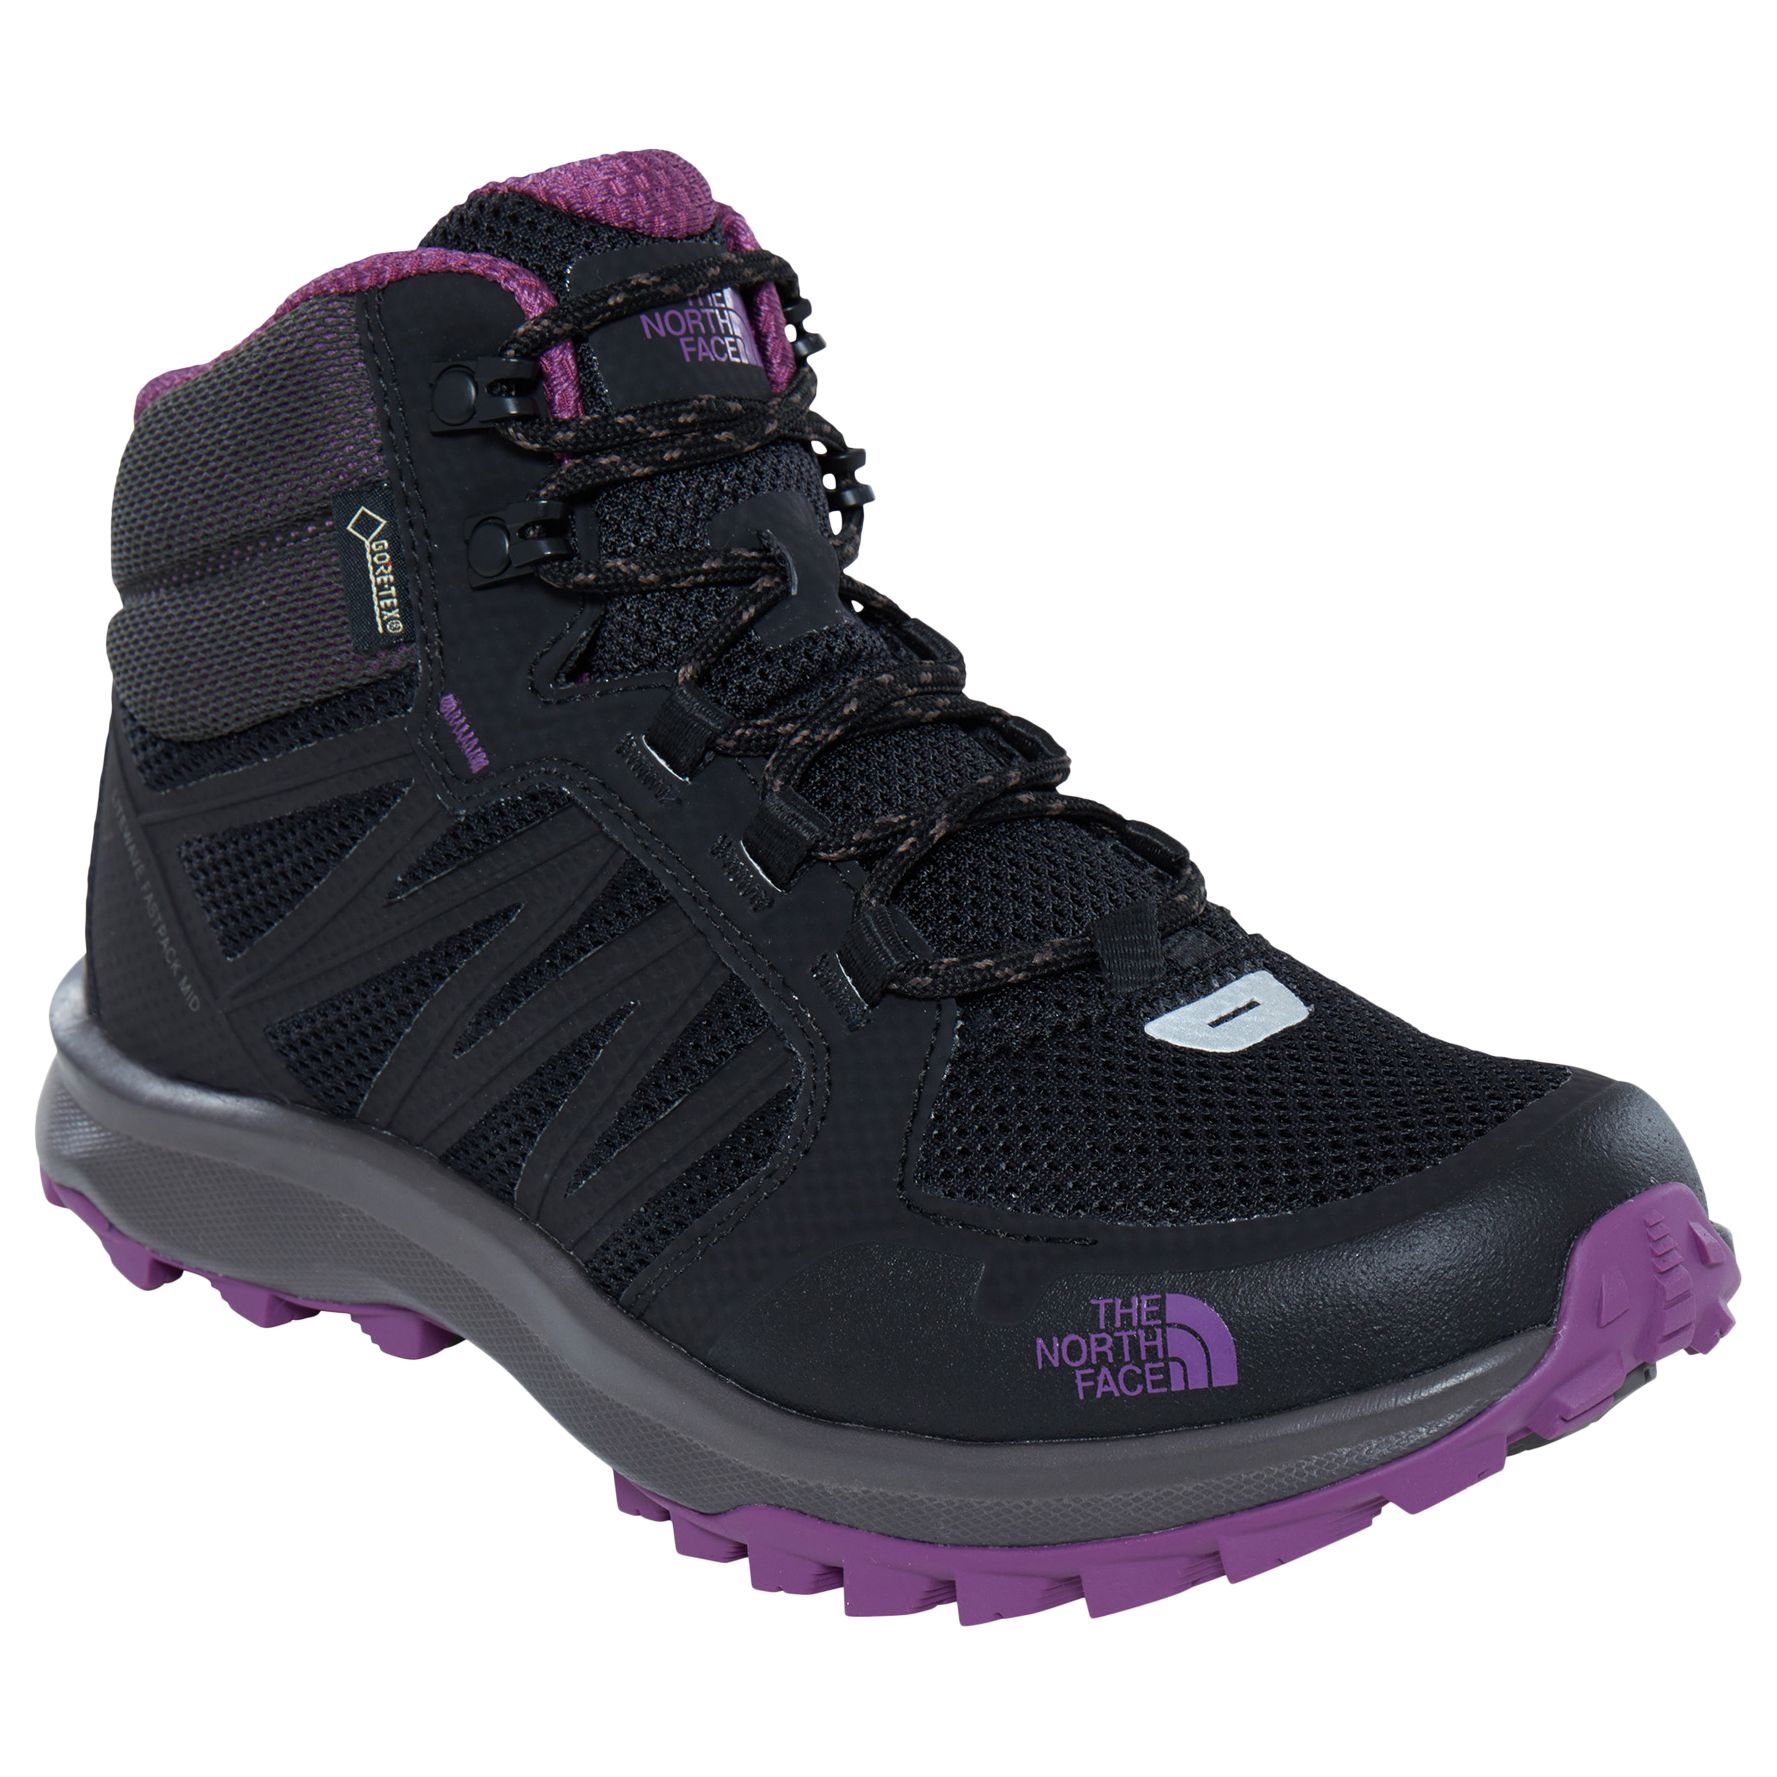 The North Face Litewave Explore Mid Gtx Women S Hiking Boots Black Purple At John Lewis Partners